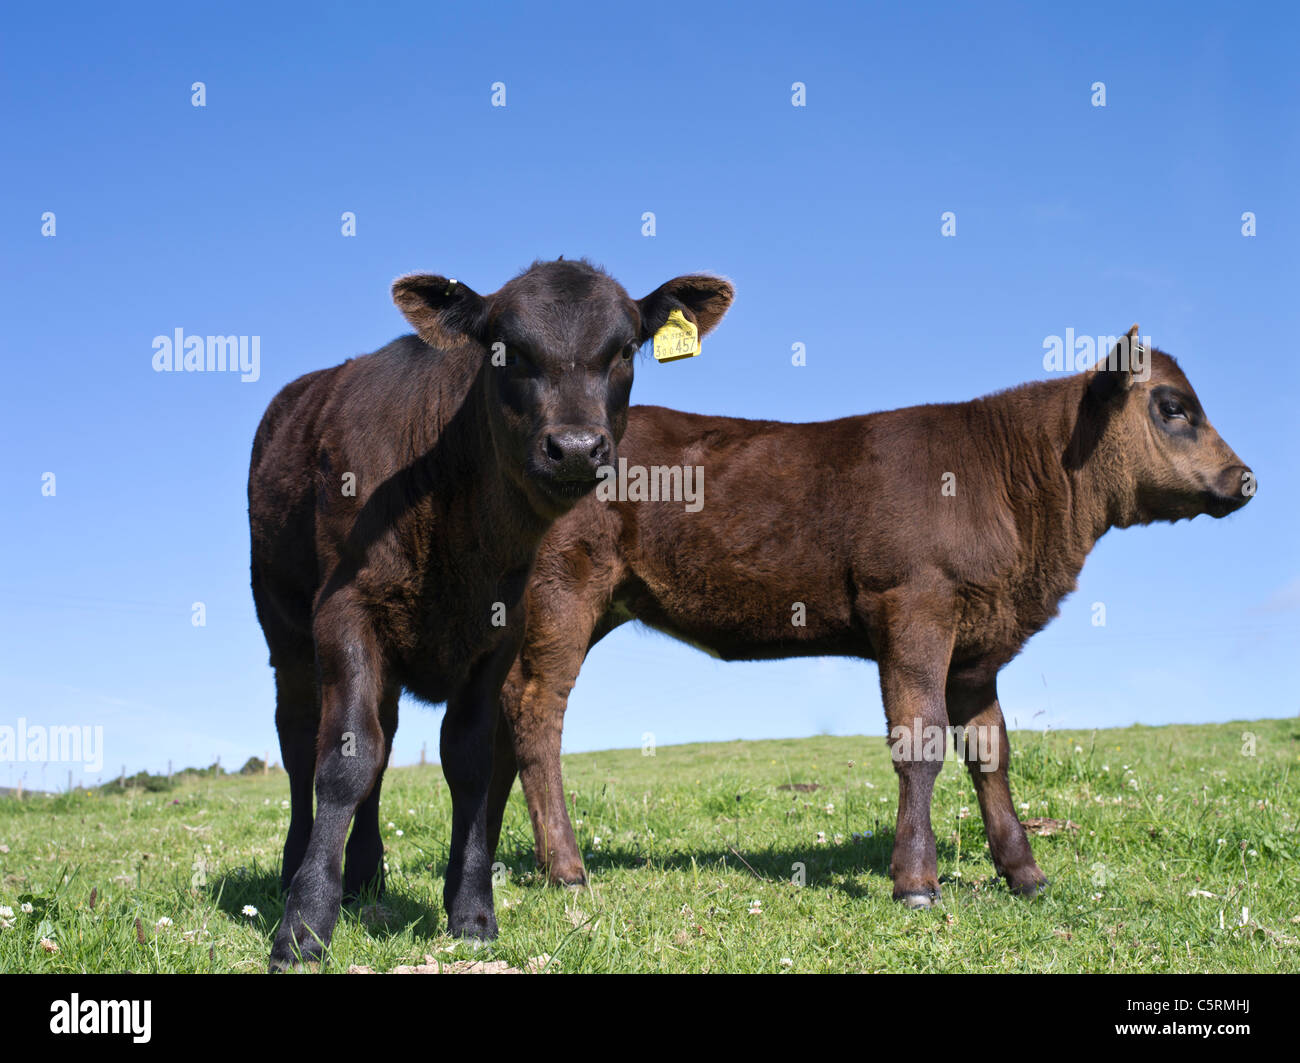 dh Aberdeen Angus vitelli BOVINI UK mucche di vitello testa sopra e profilo nero uk mucca gb giovane cute scozia bestiame Foto Stock